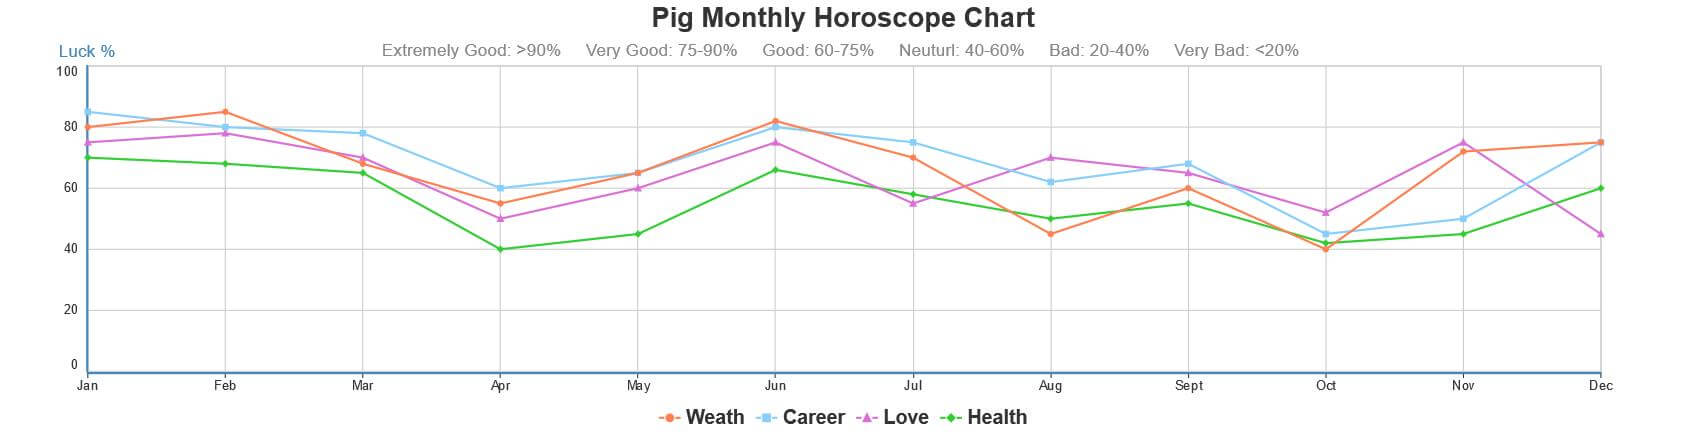 Chinese Horoscope 2018 Pig